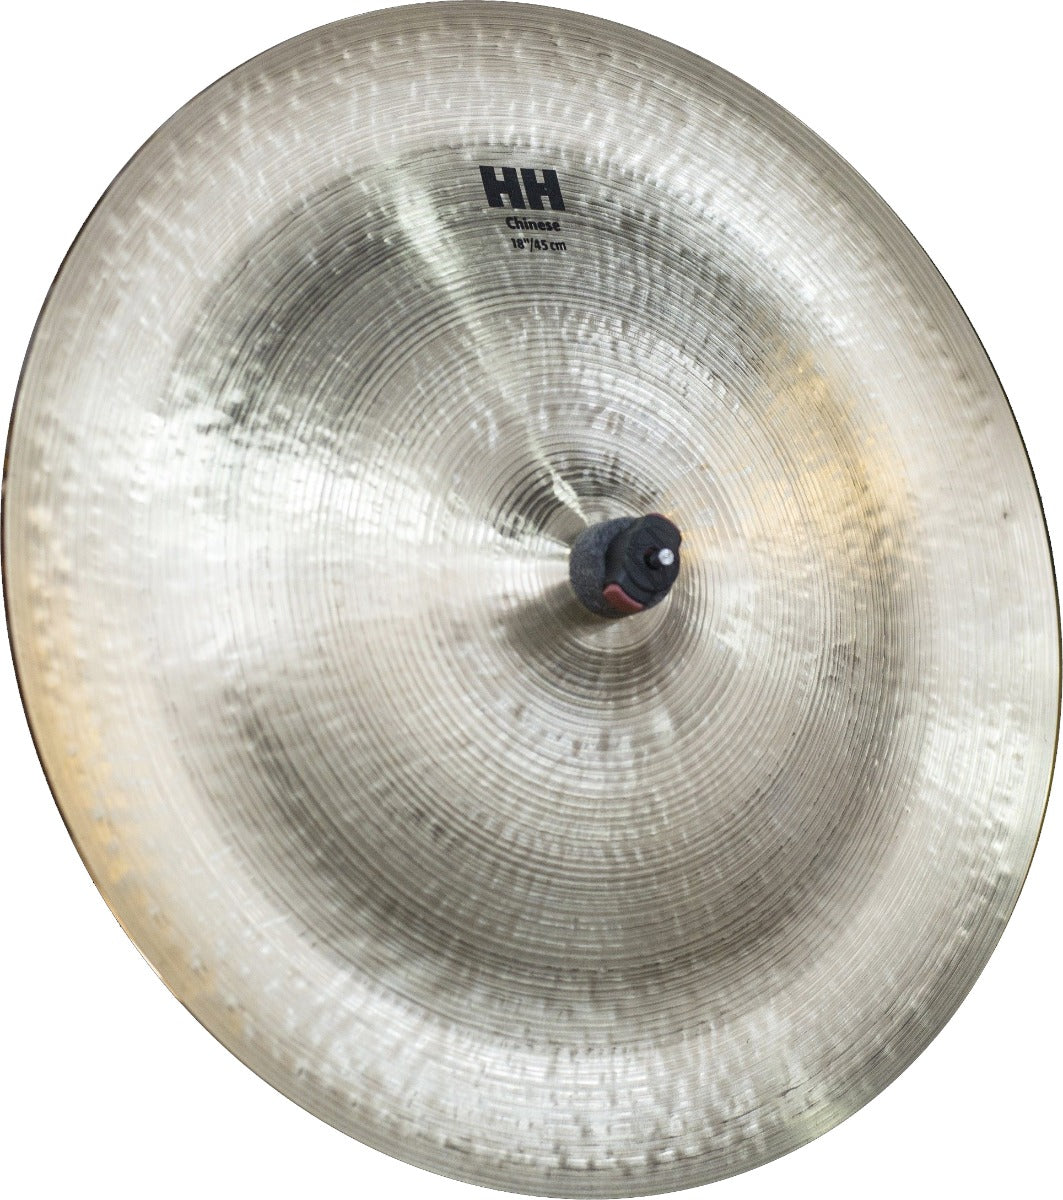 Sabian 18” HH China Cymbal